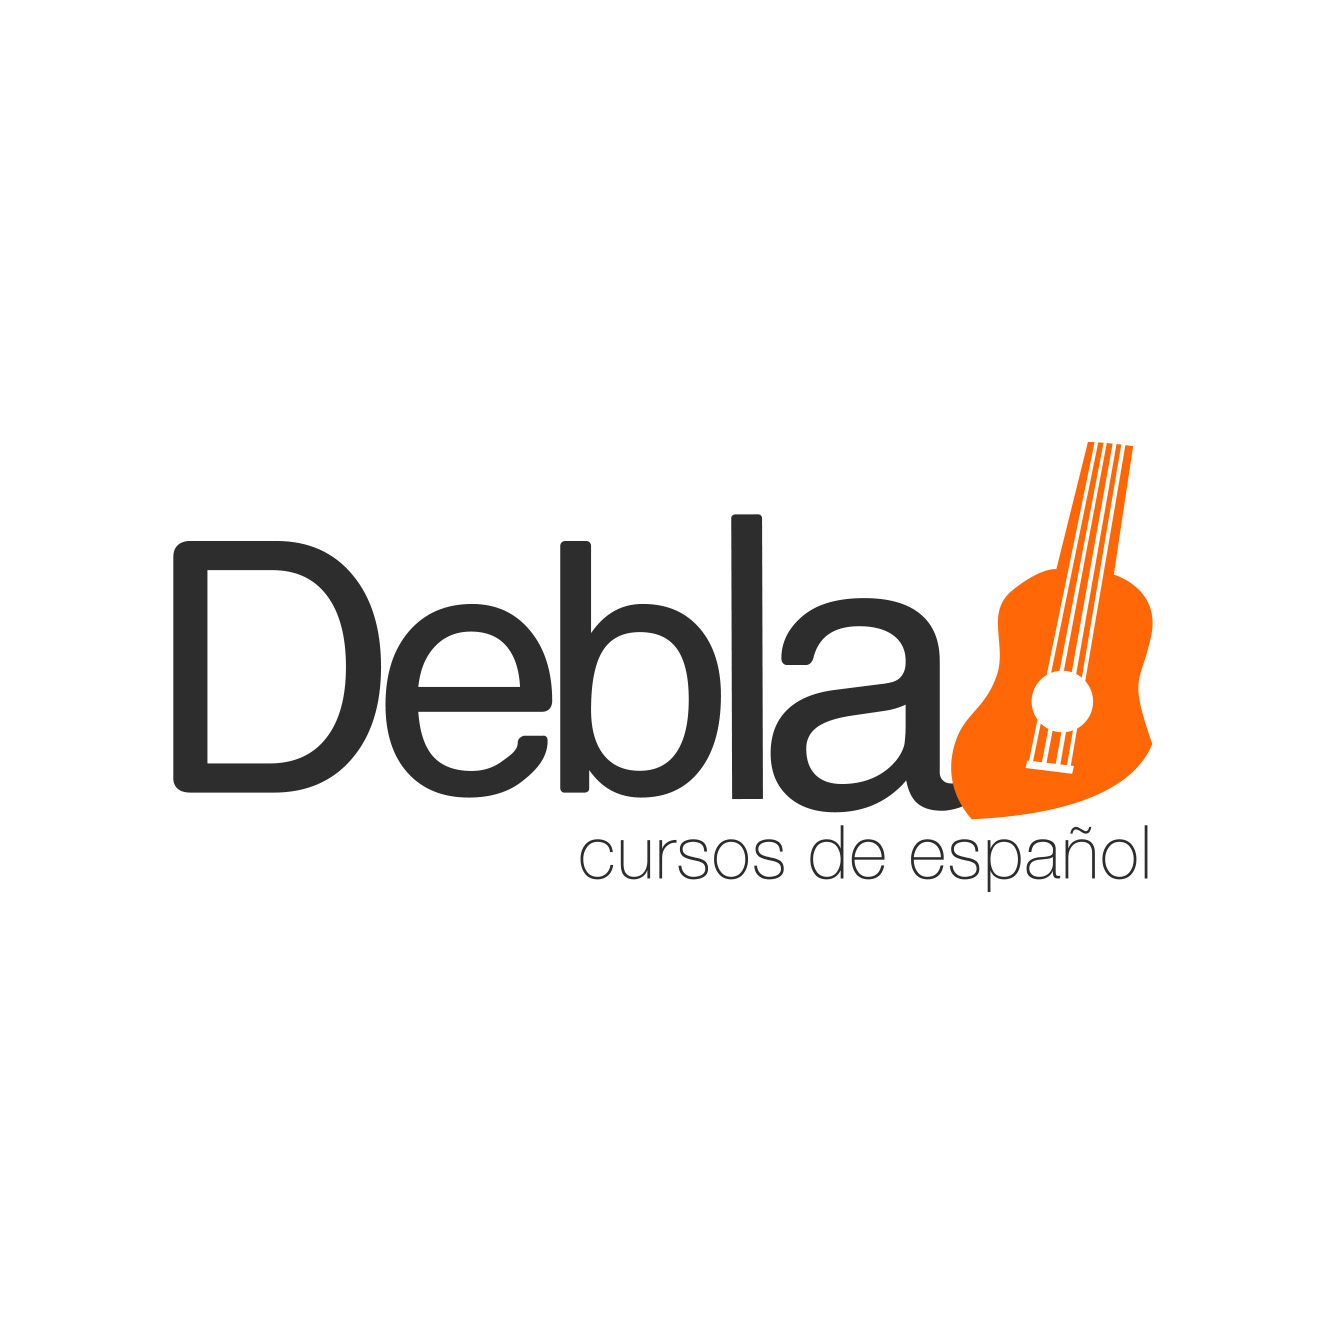 Spanish language school | Learn Spanish in Málaga with Debla